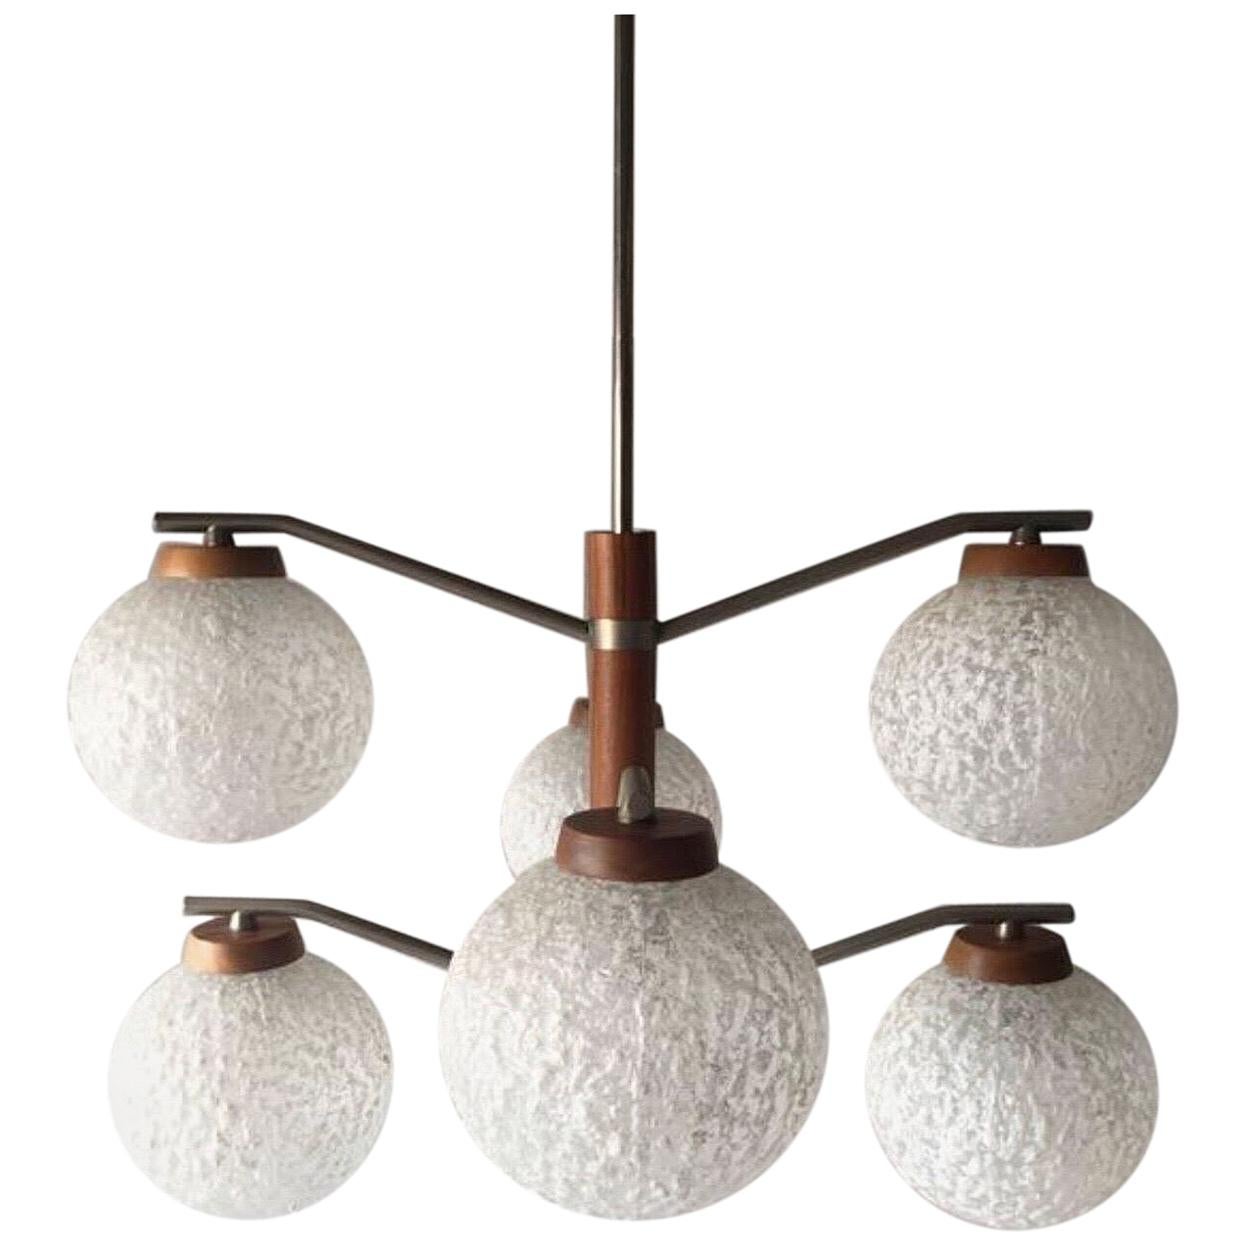 Temde 6 Armed Crinkly Ball Glass Ceiling Lamp, Teak Chandelier, 1960s Germany For Sale